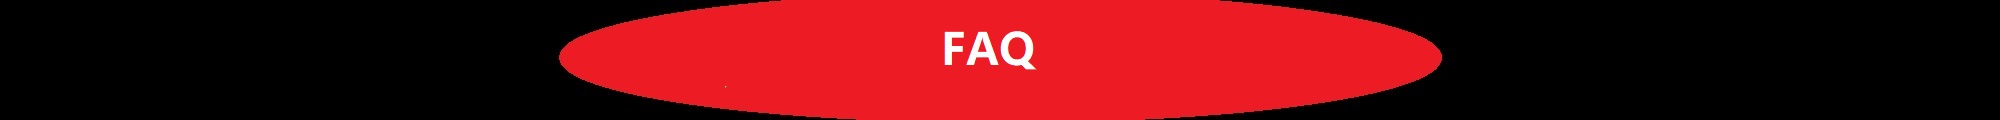 Product FAQ.jpg